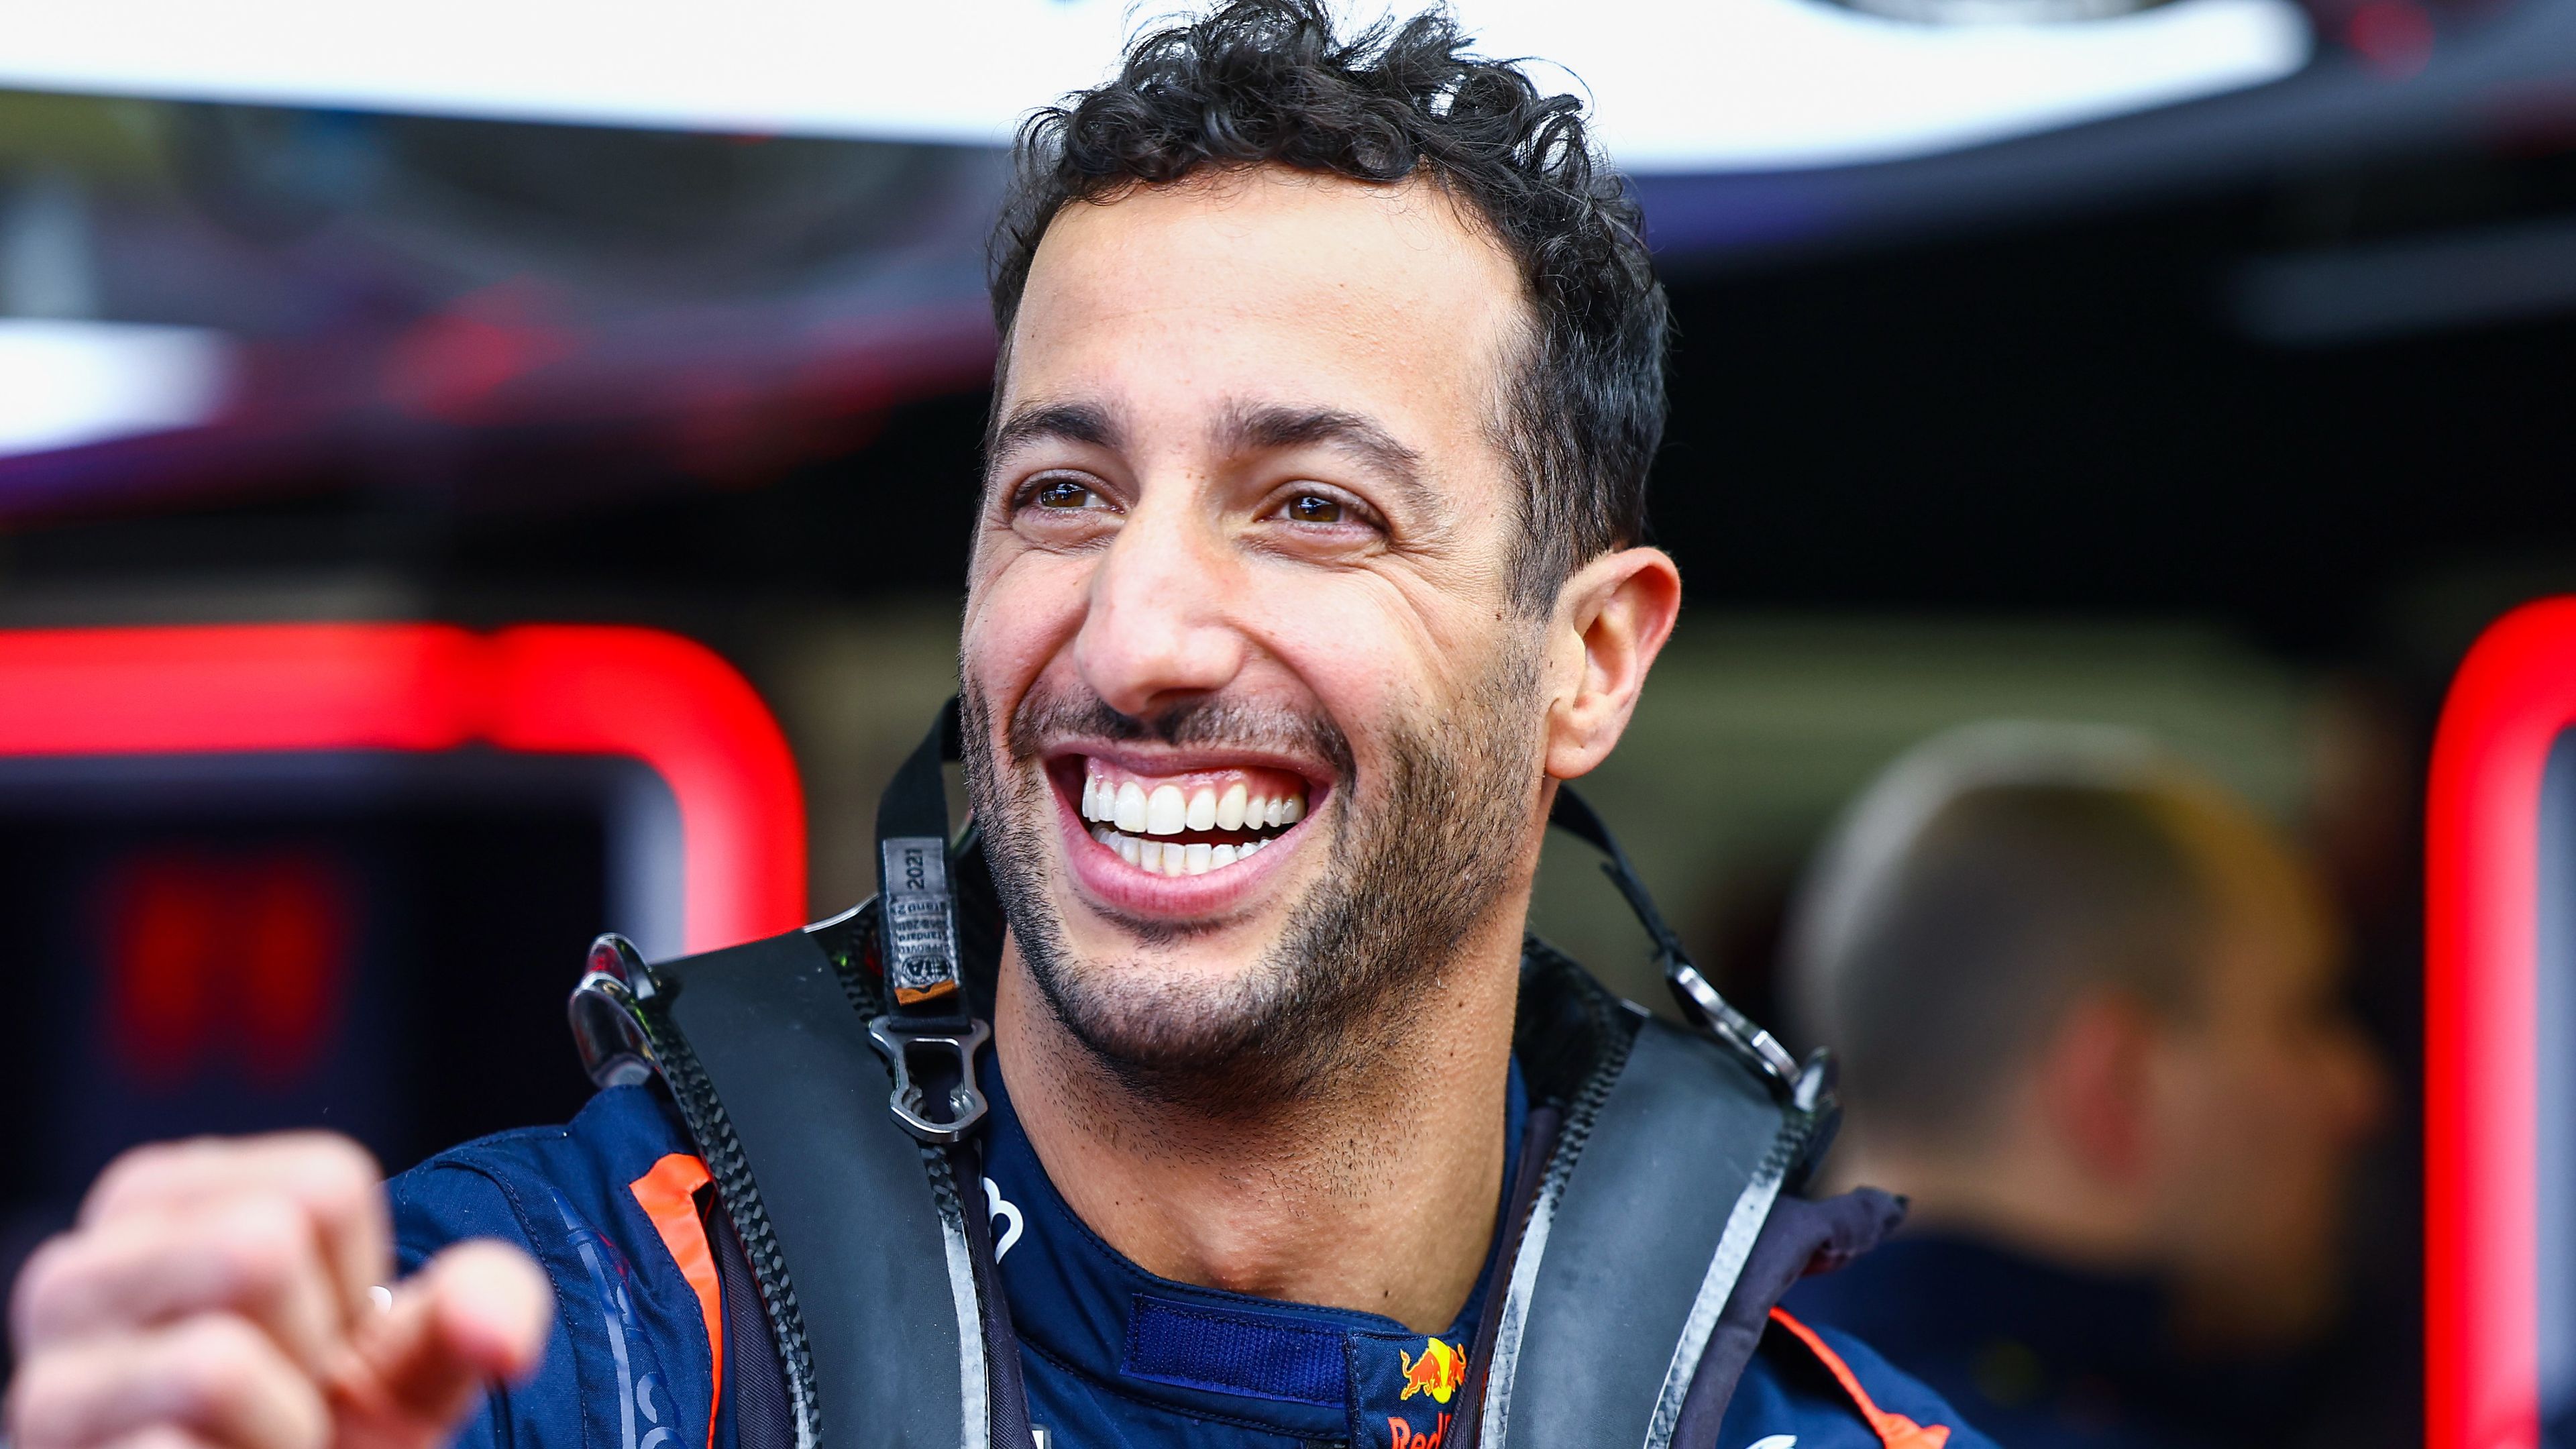 Daniel Ricciardo sits in the Red Bull F1 car ahead of the Australian Grand Prix.